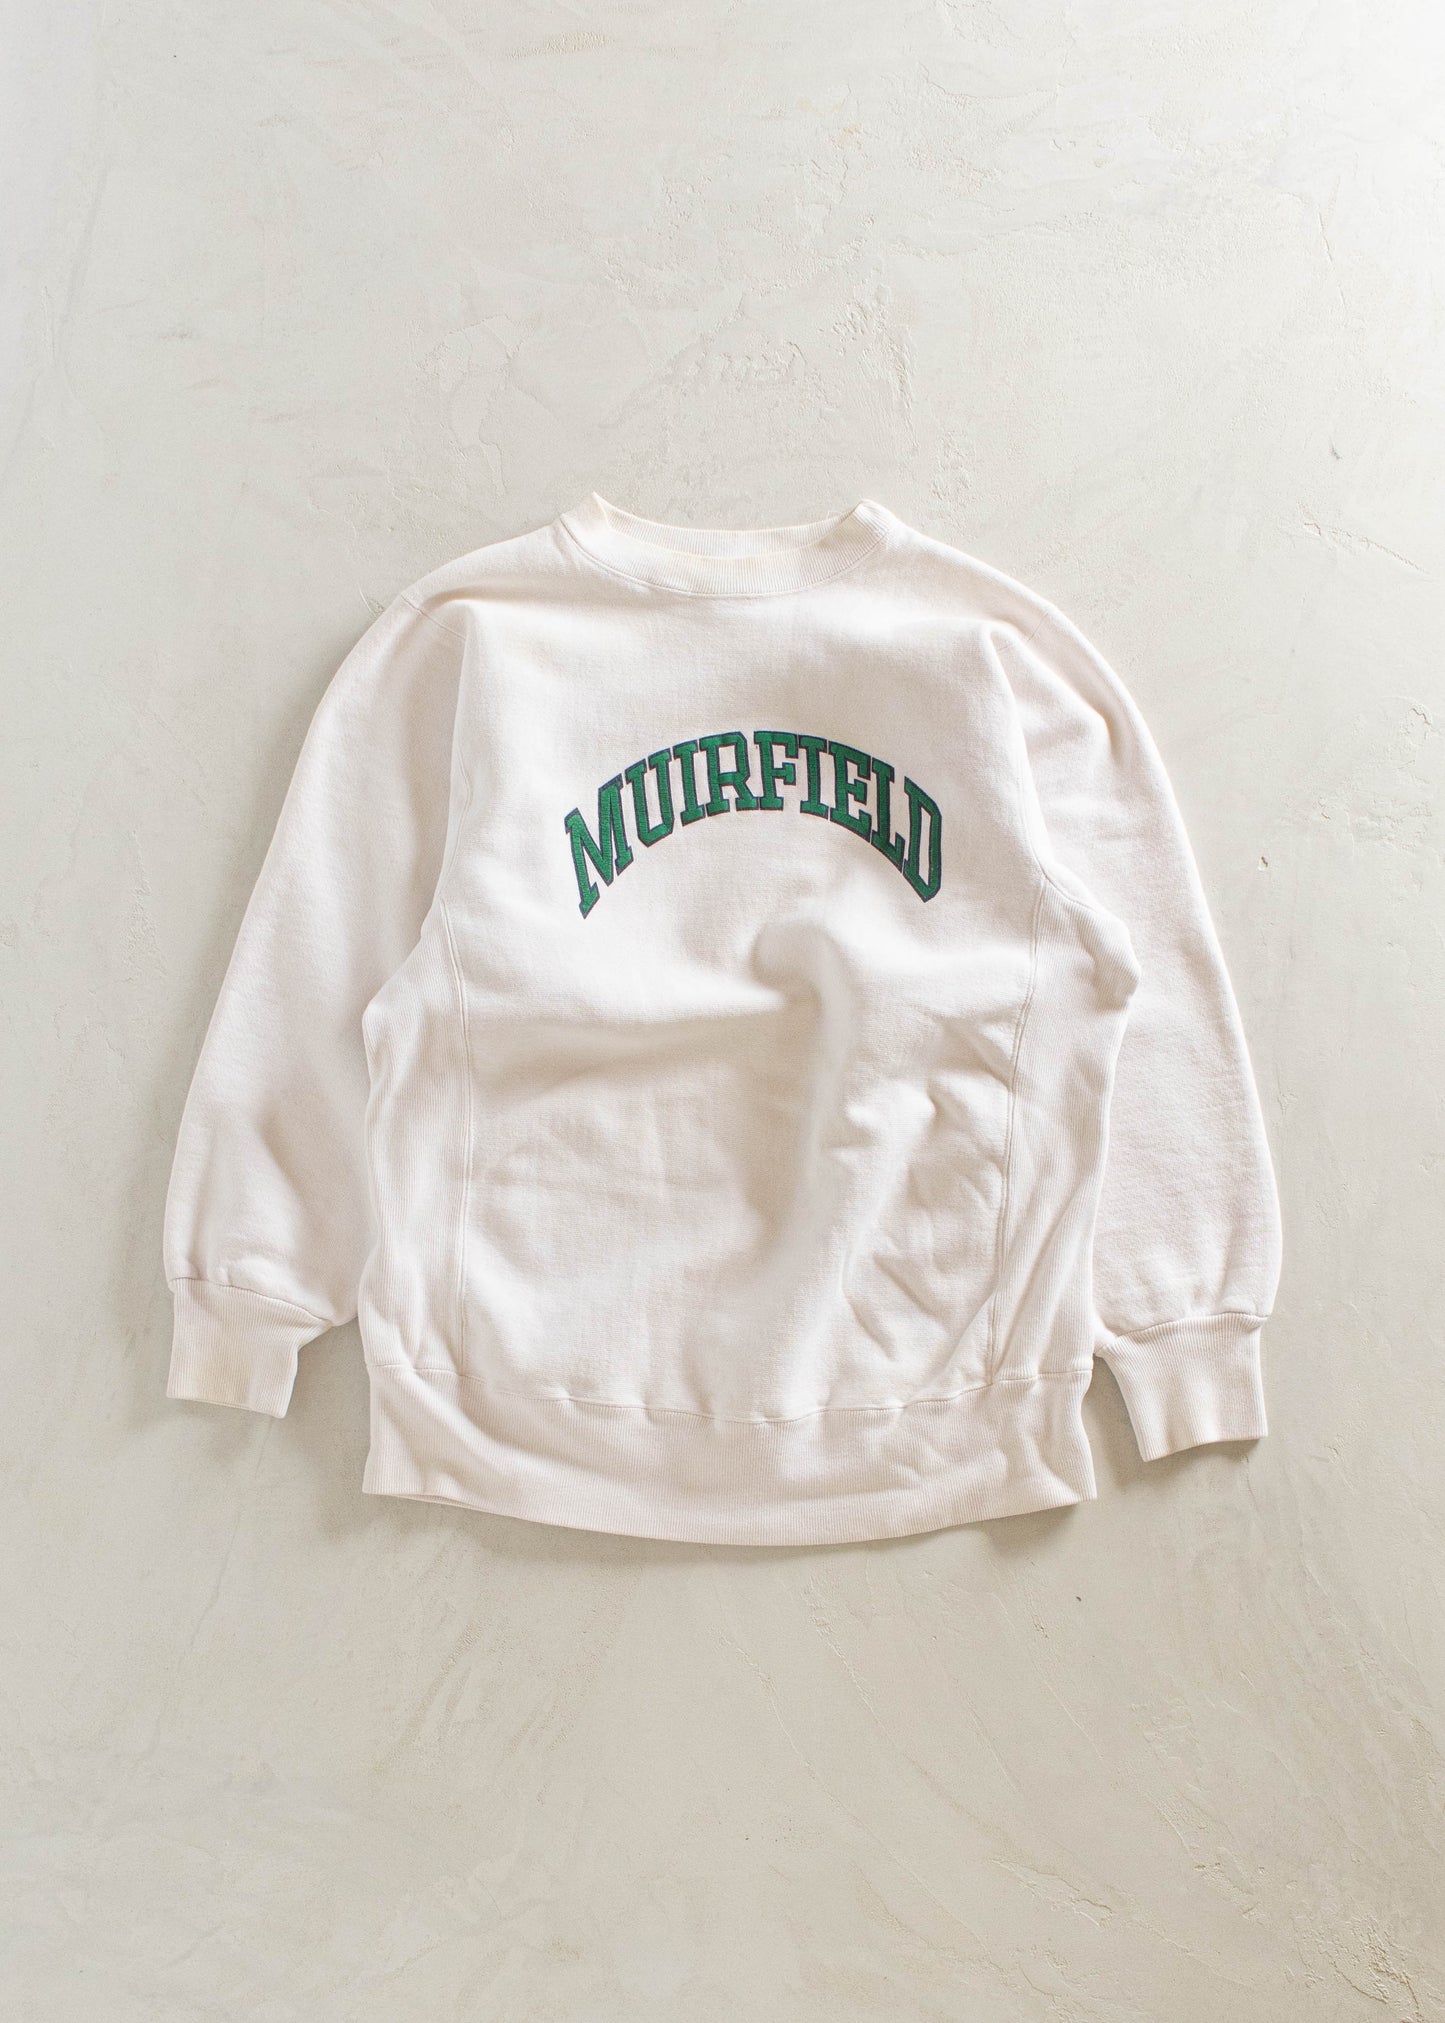 1980s Reverse Weave Muirfield Souvenir Sweatshirt Size M/L